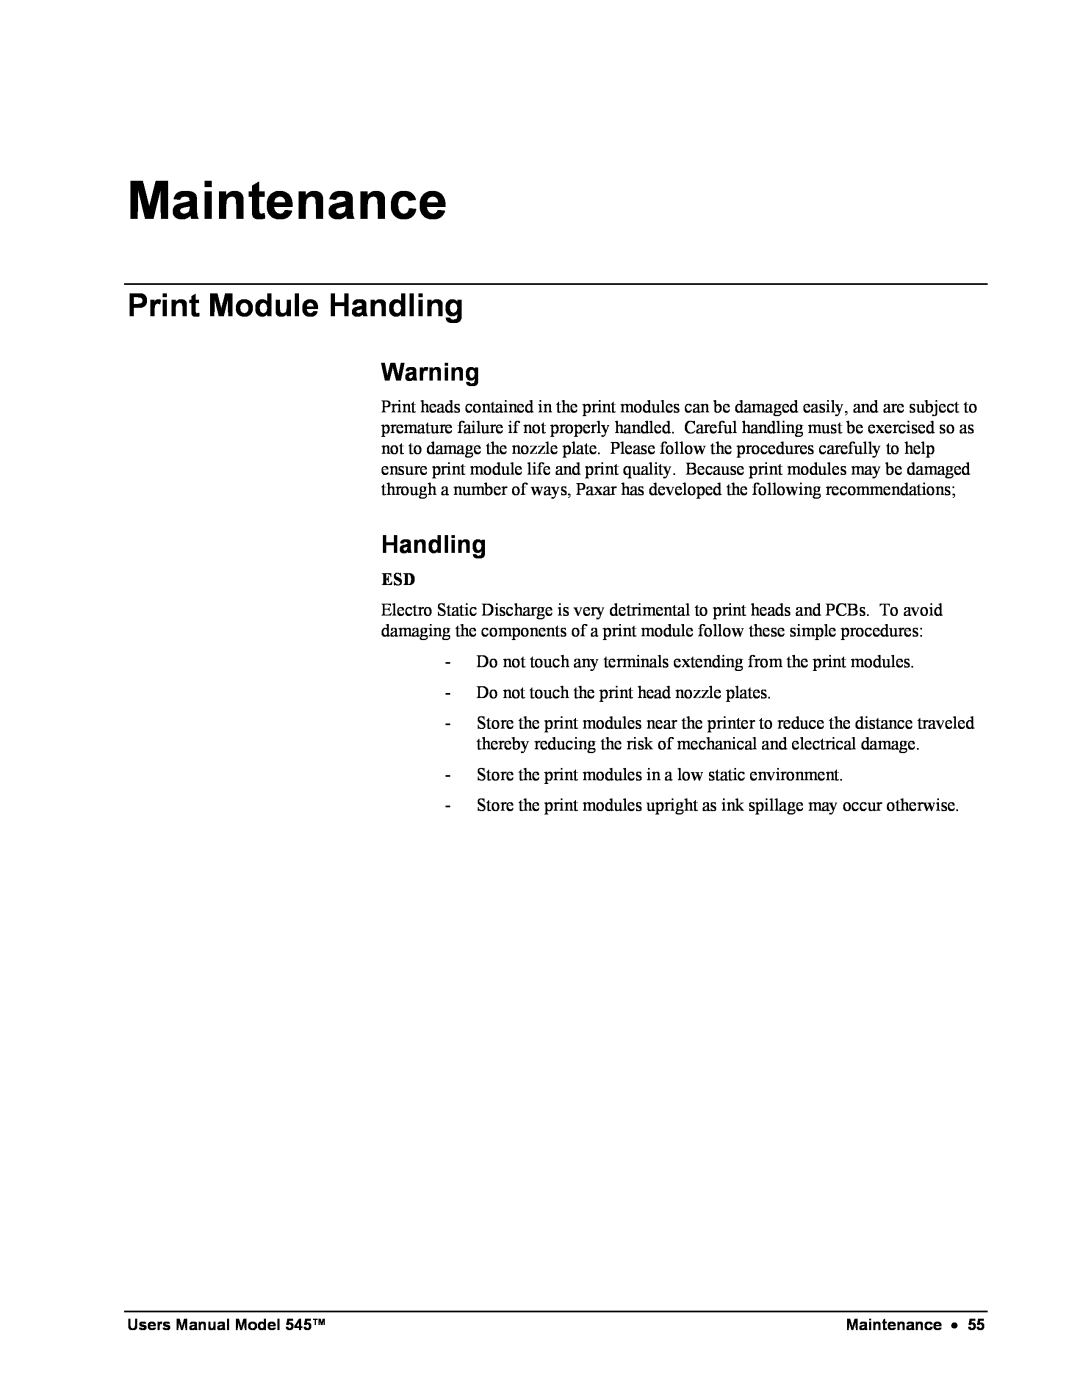 Paxar 545 user manual Maintenance, Print Module Handling 